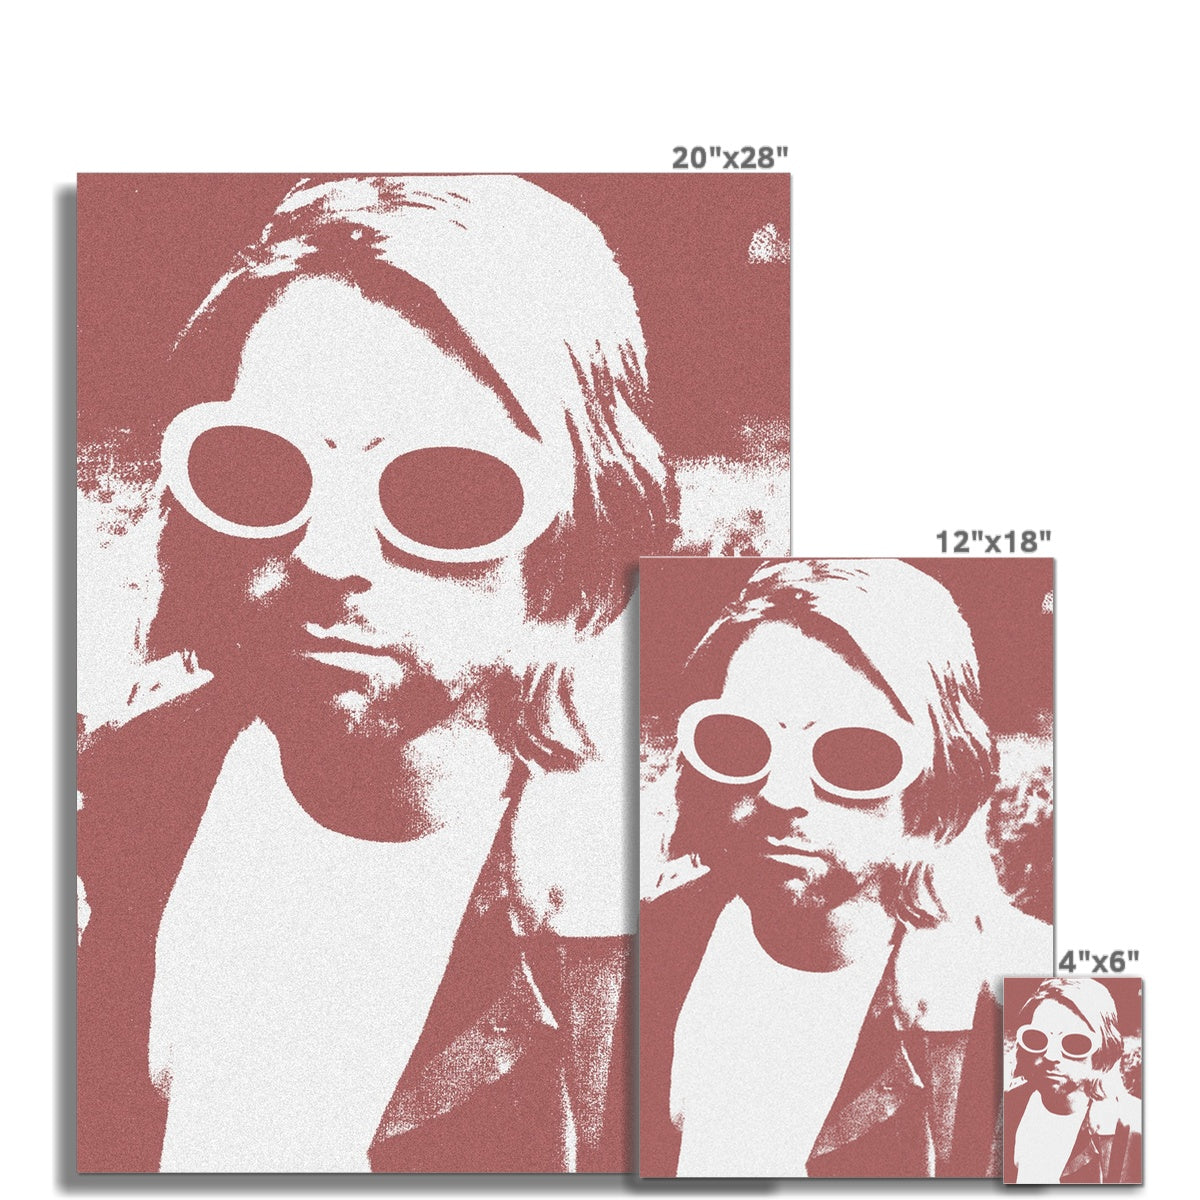 Kurt Cobain Print Hahnemühle German Etching Print